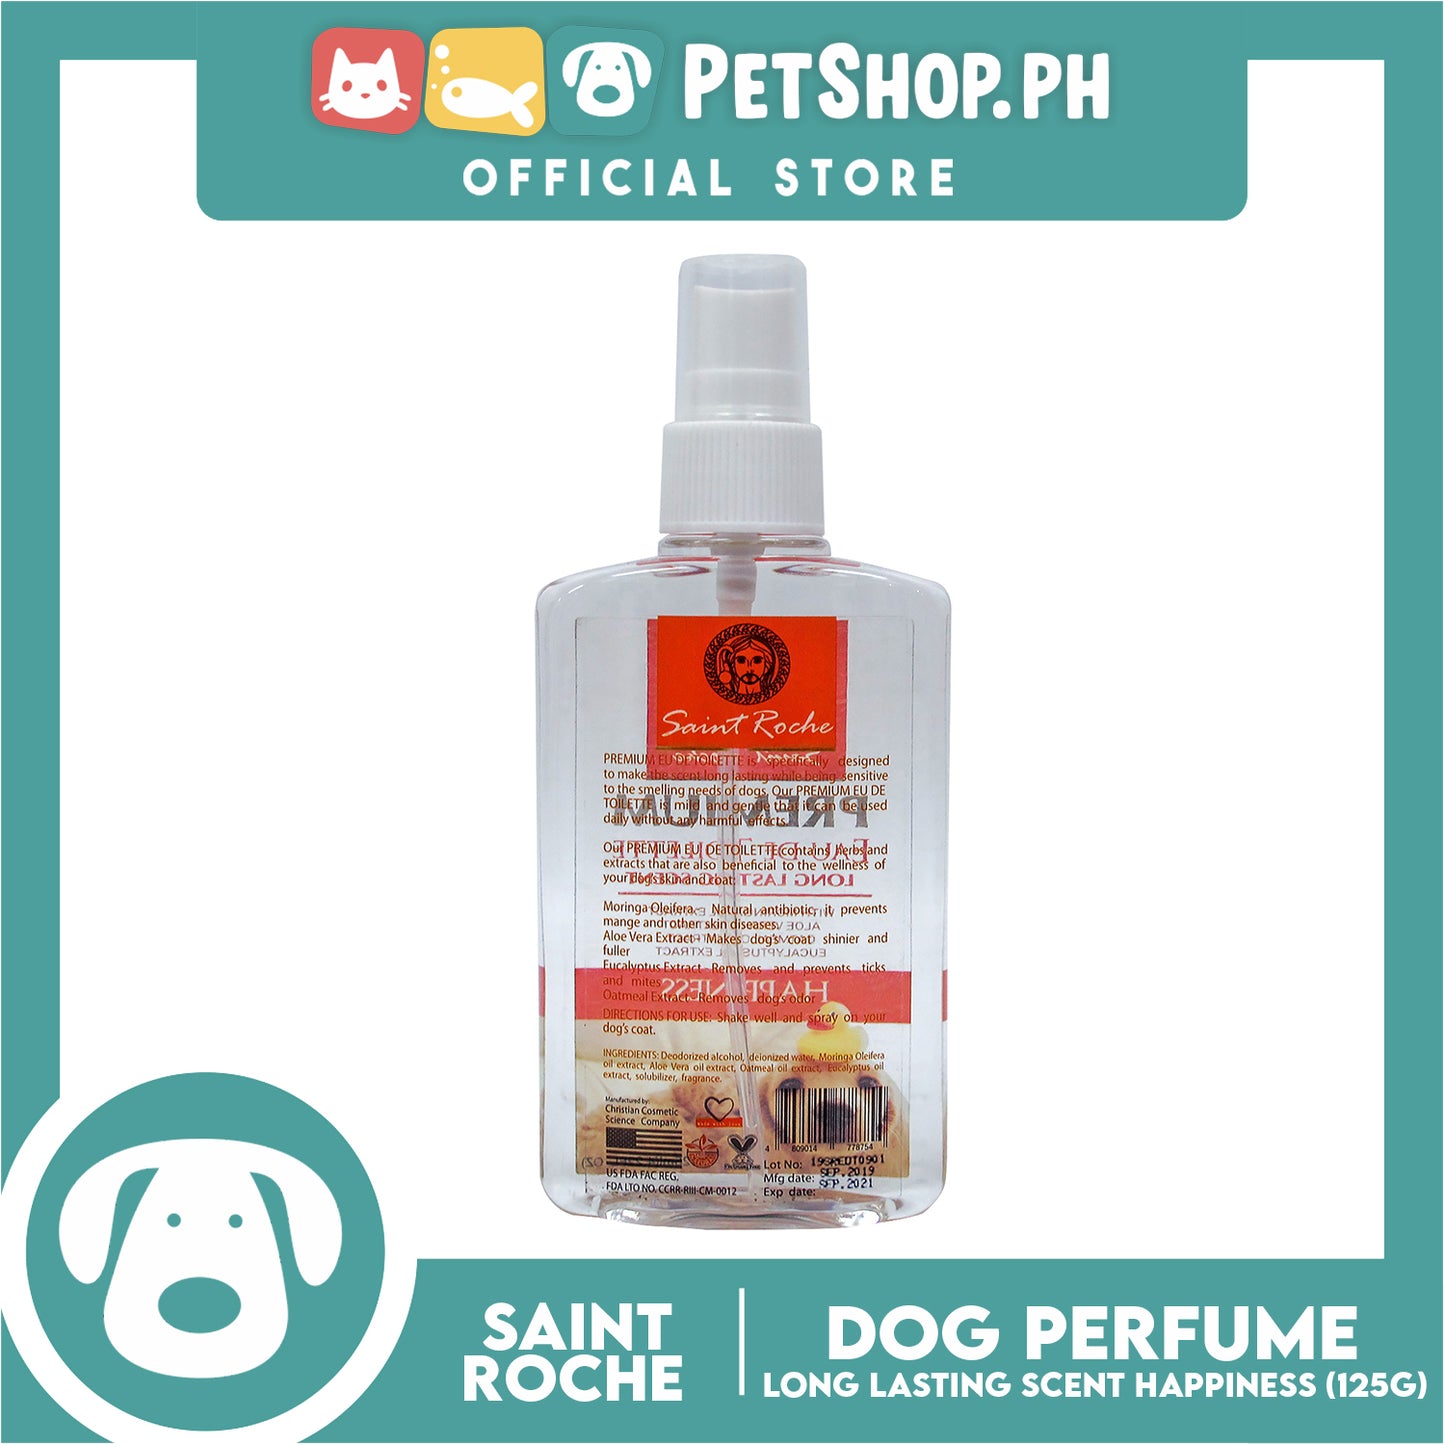 Saint Roche Premium Eu De Toilette Scent (Happiness) 125ml Perfume for Your Dogs